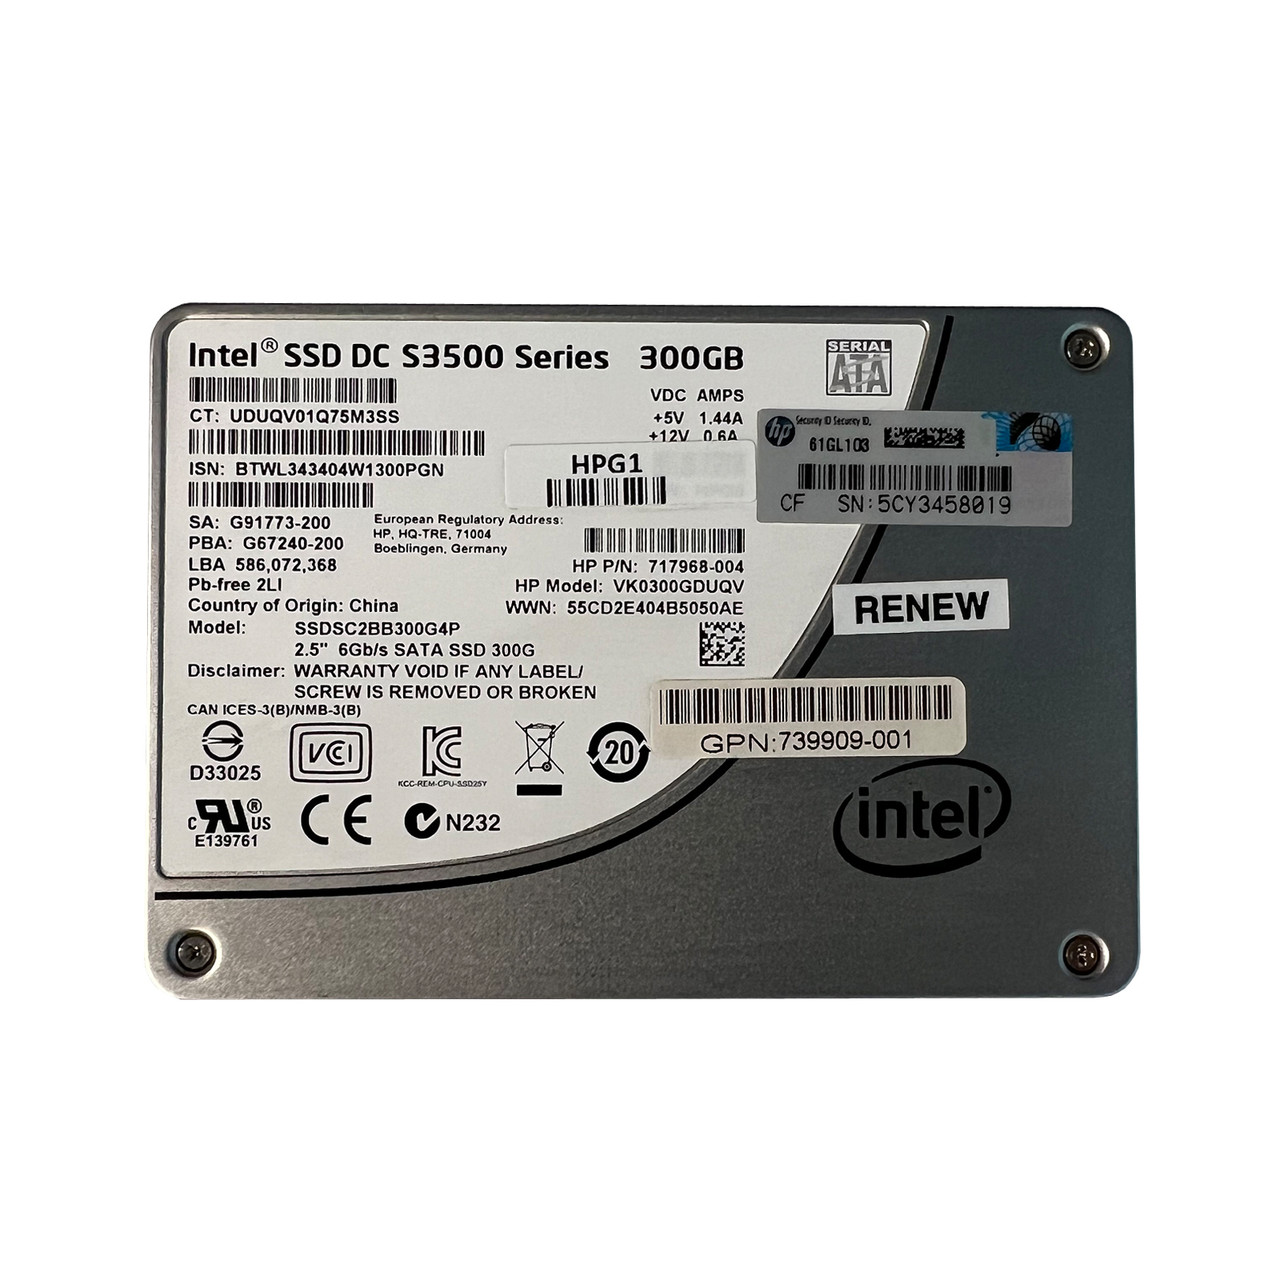 HP 717968-004 300GB SATA 6GBPS 2.5" SSD VK0300GDUQV